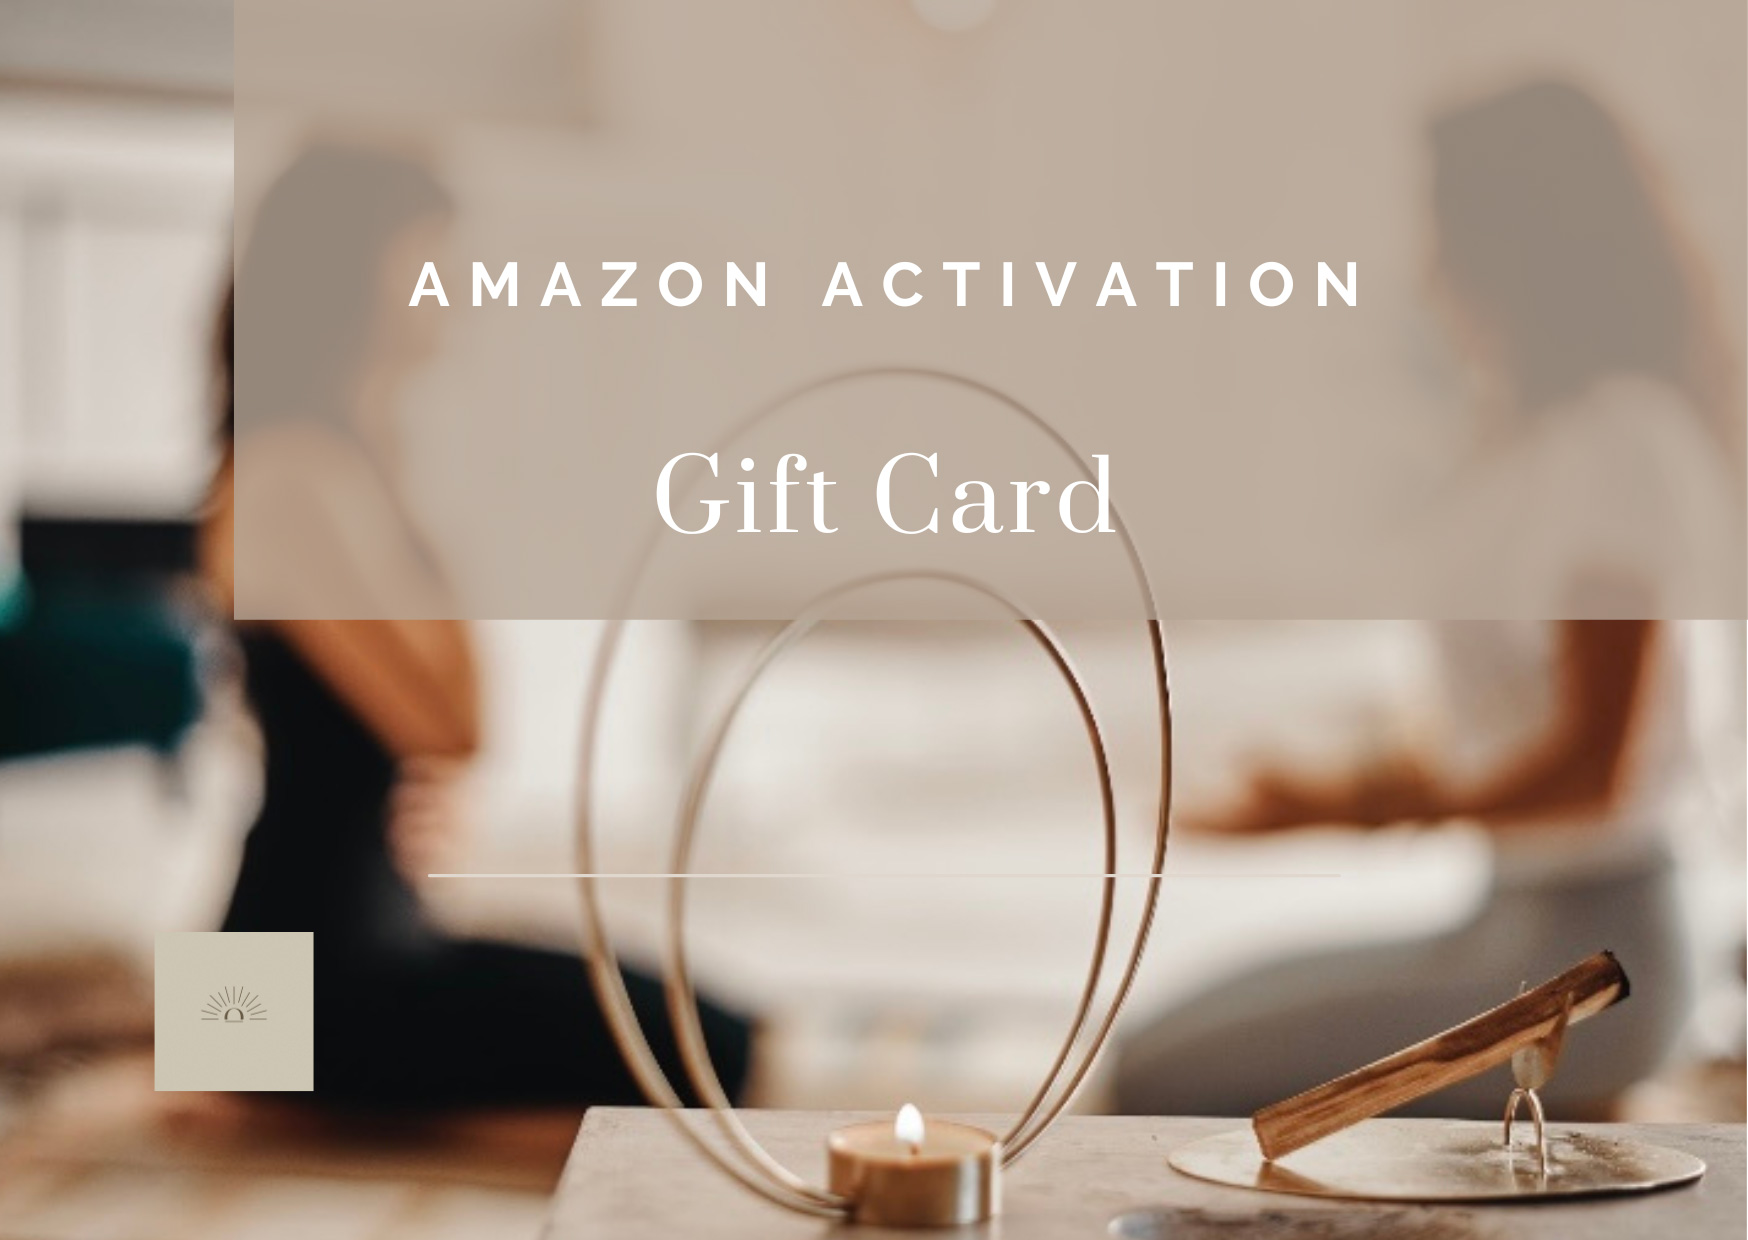 Amazon Activation Gift Card